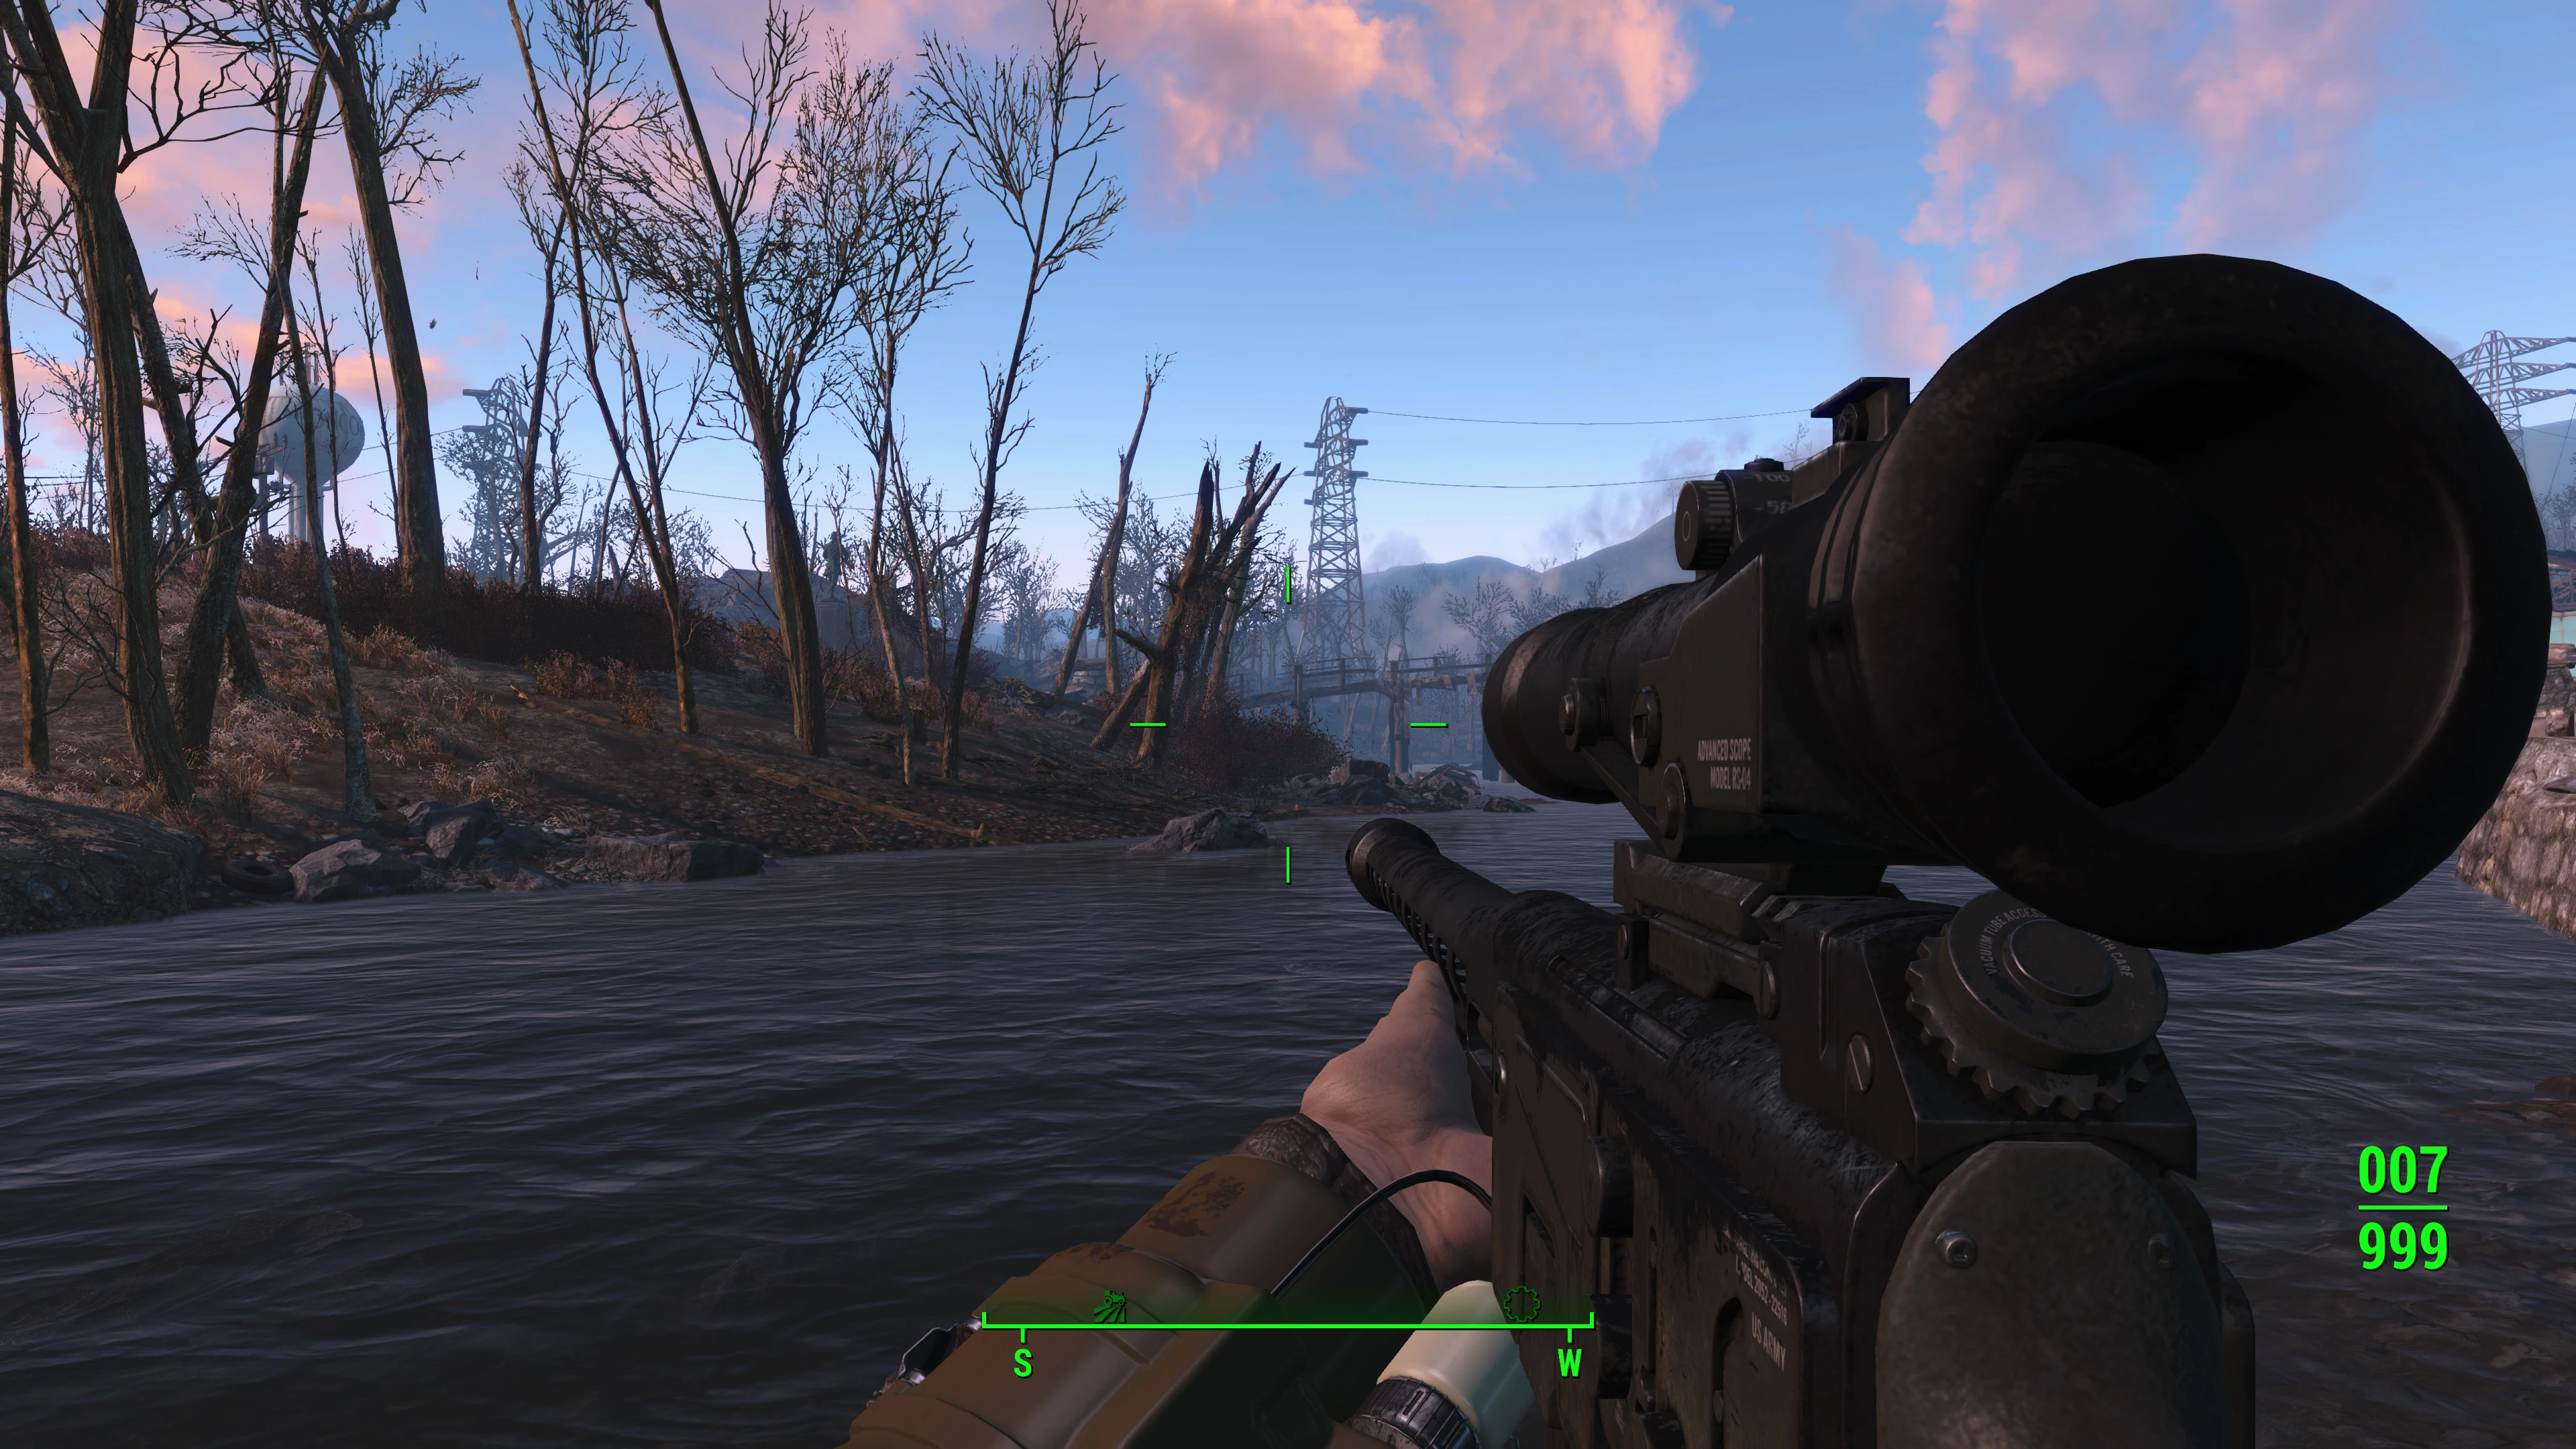 Sniper rifles in fallout 4 фото 92